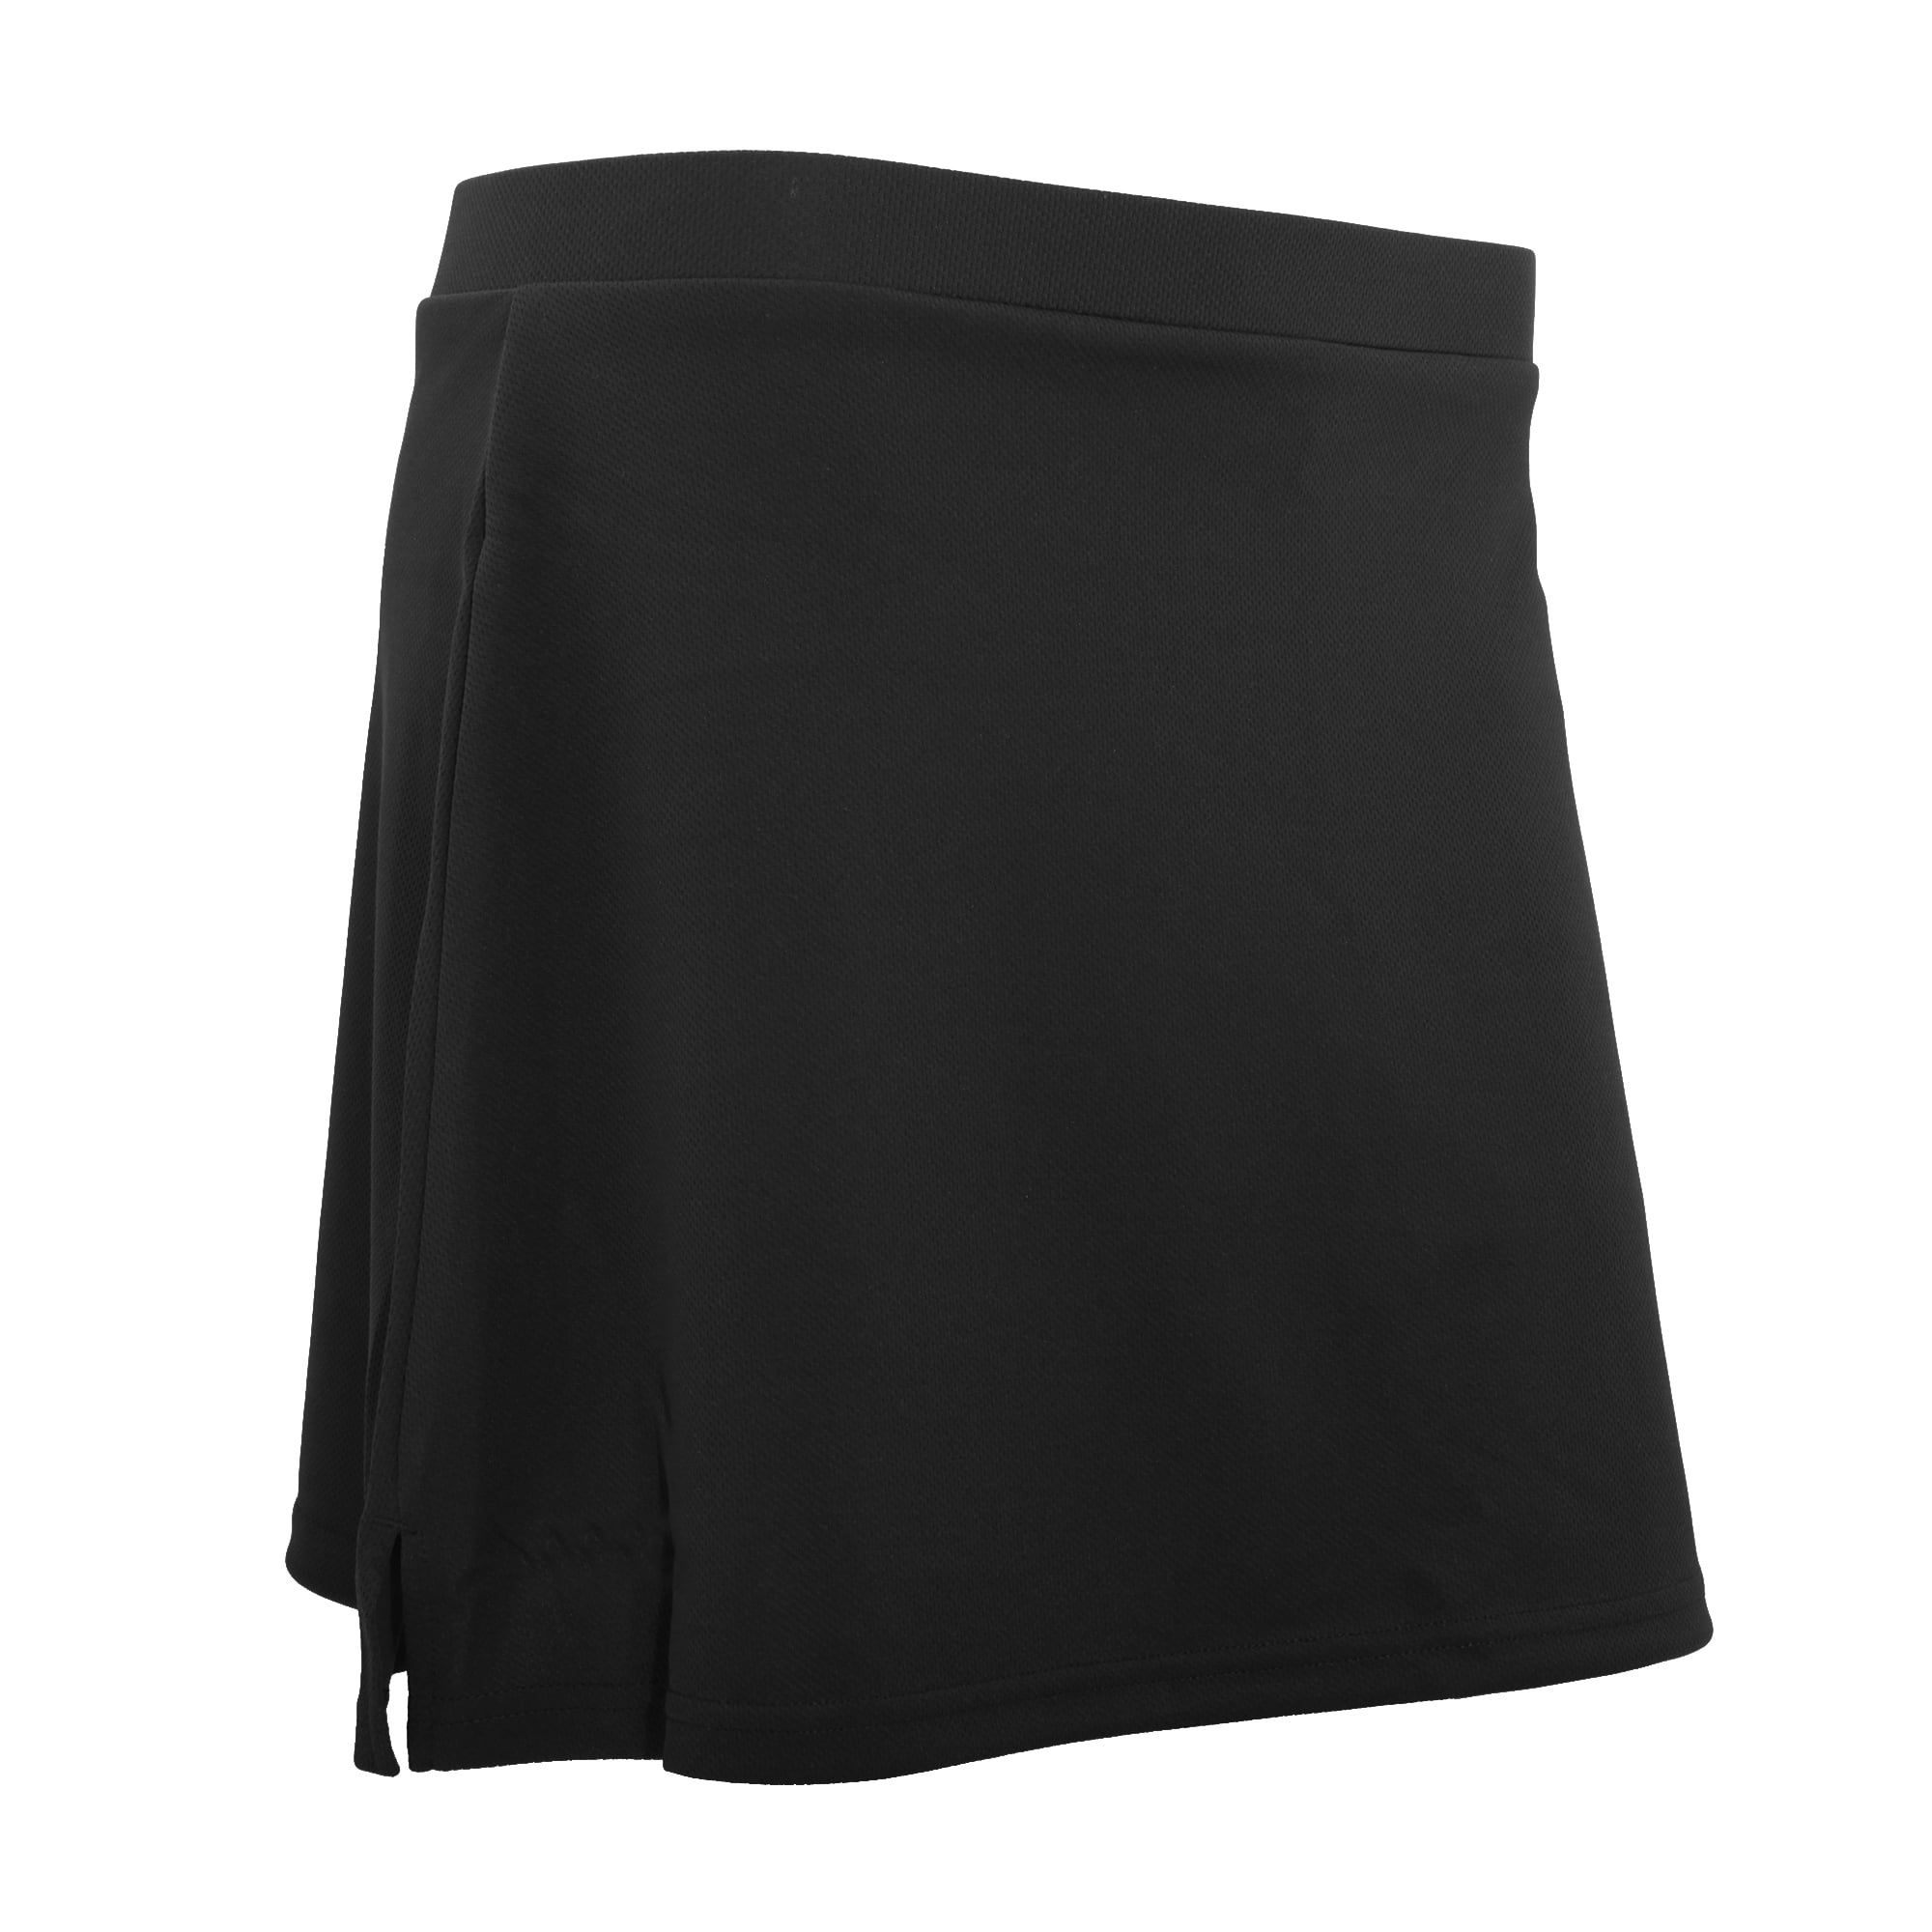 Spiro Womens Reflective Quick Dry Sports Netball Fitness Gym Shorts Skirt Skort 